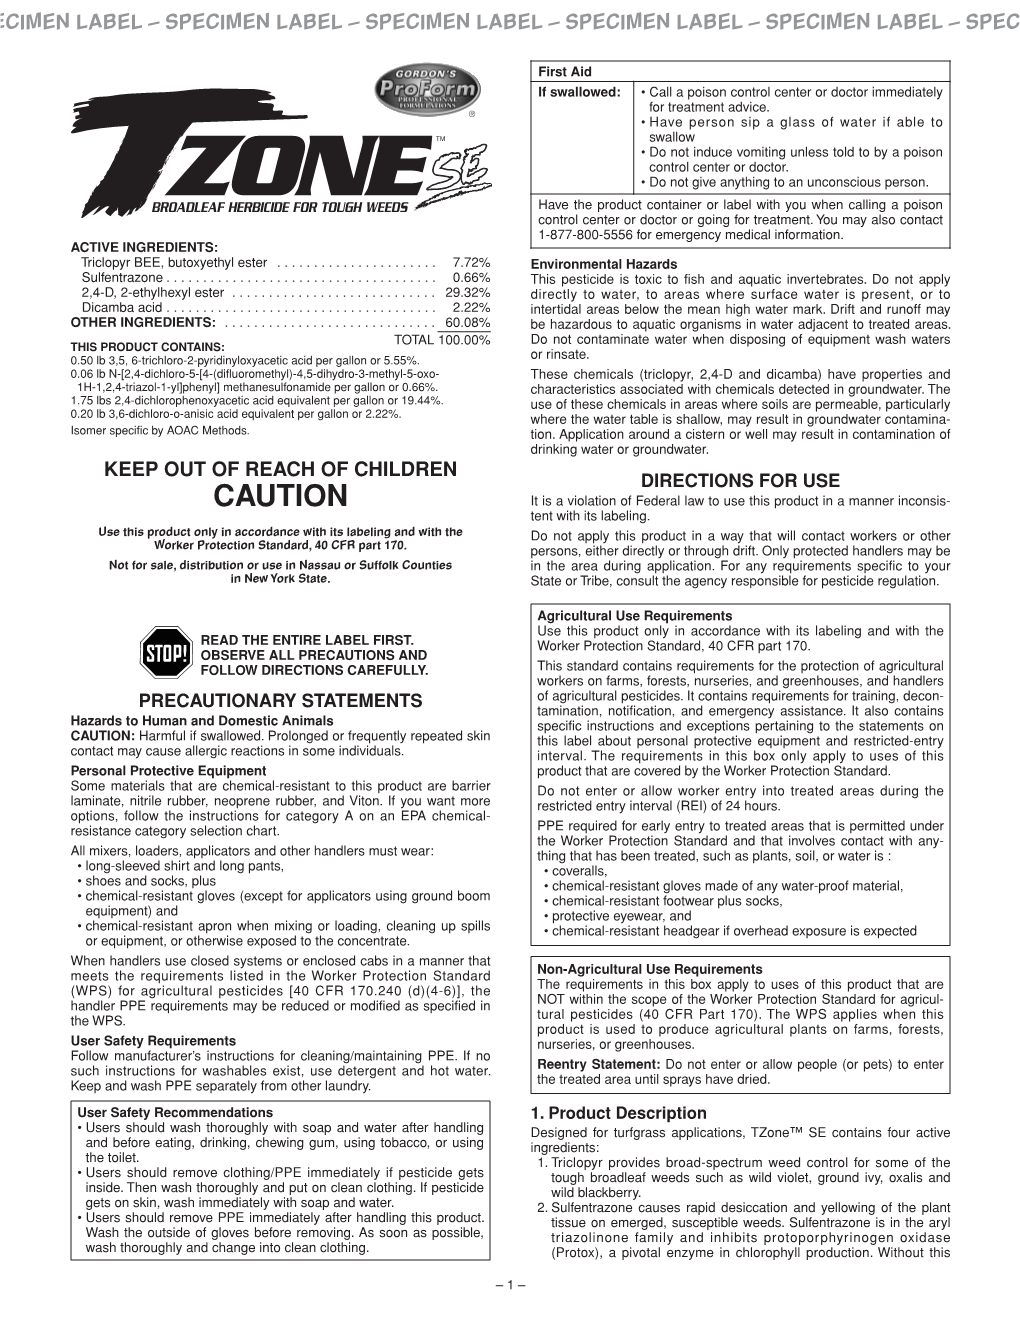 Tzone SE Specimen Label